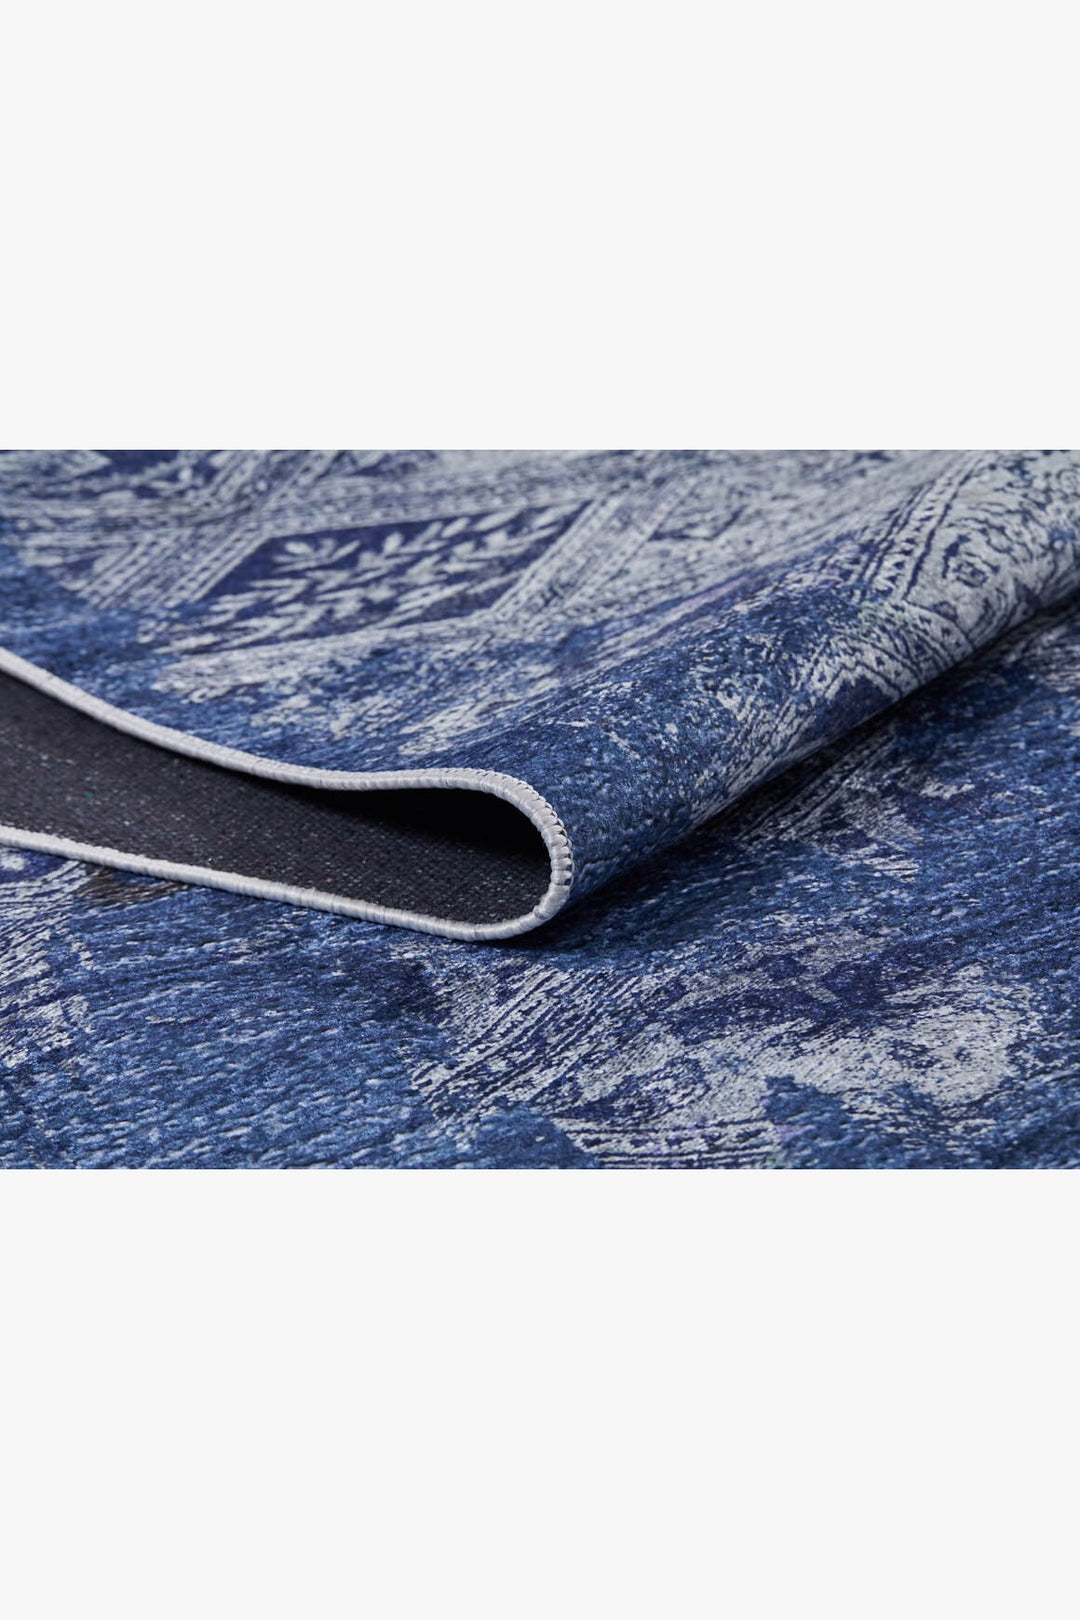 machine-washable-area-rug-Erased-Modern-Collection-Blue-JR1134